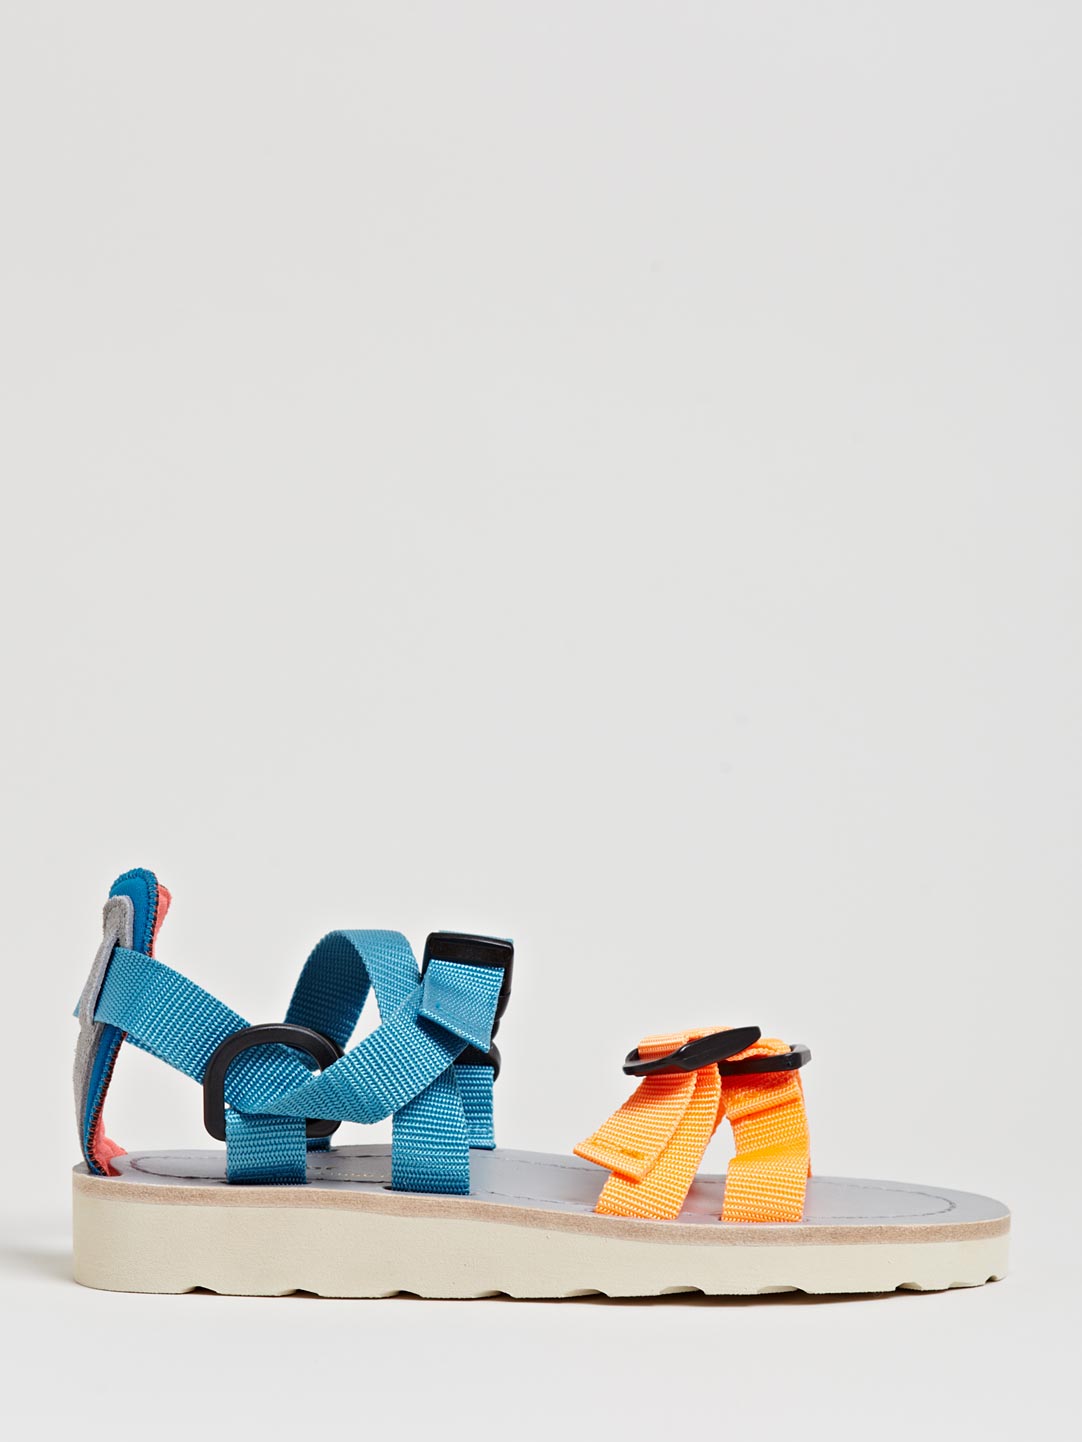 Lyst - Kolor Womens Geowebb Strap Sandals